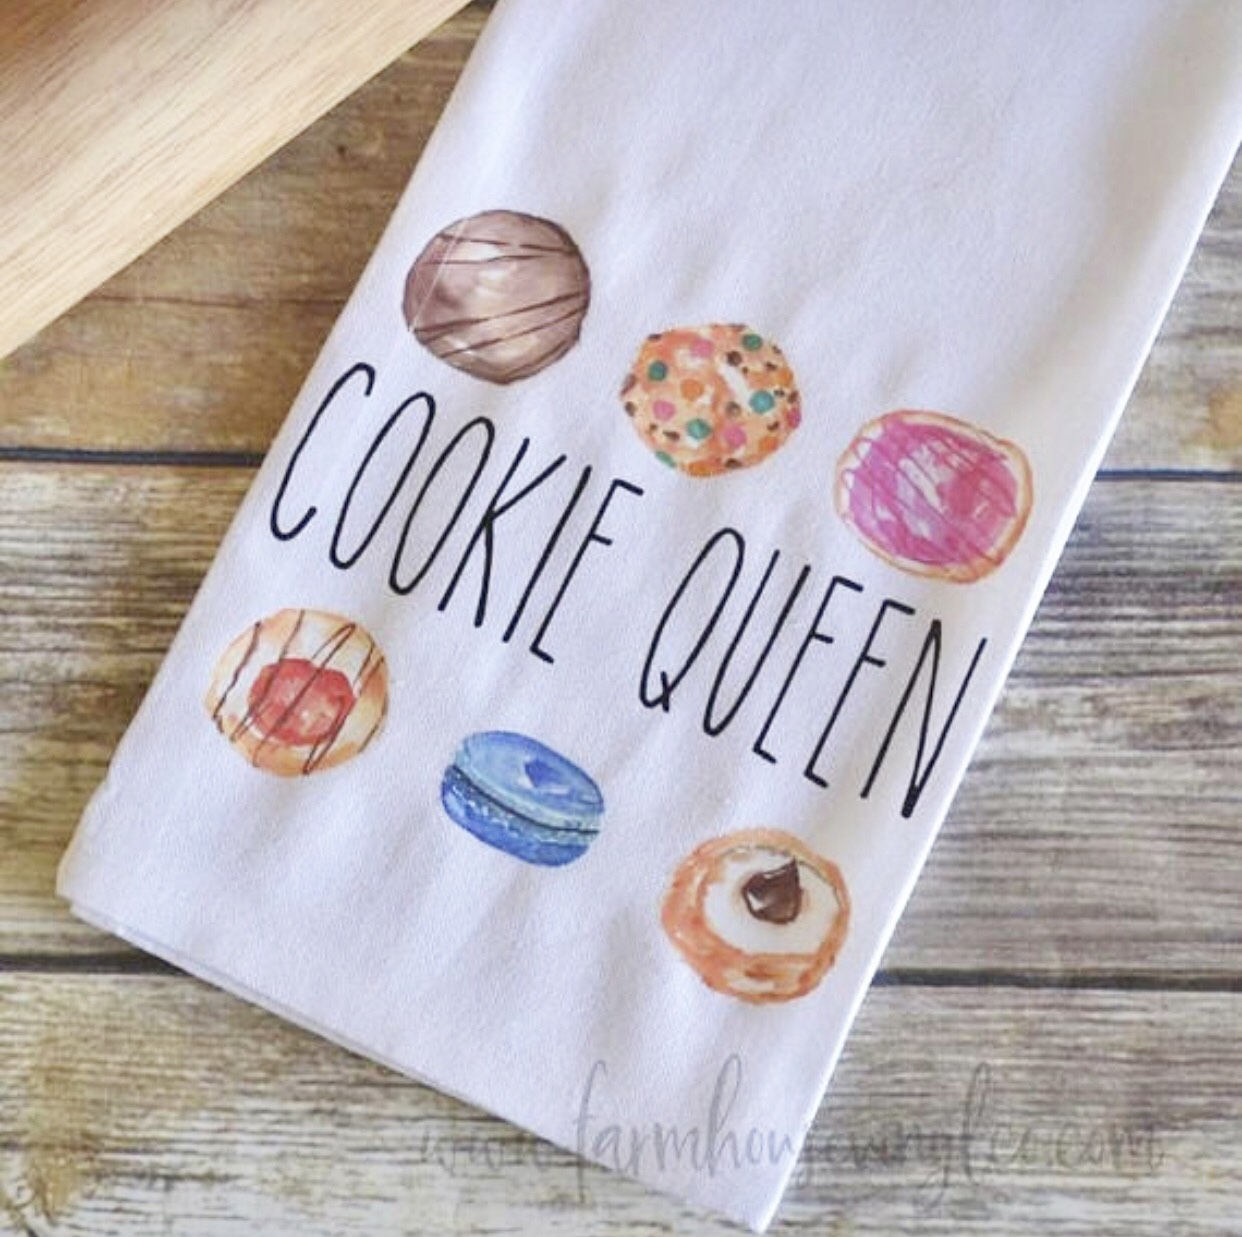 Cookie Queen Towel - Farmhouse Vinyl Co